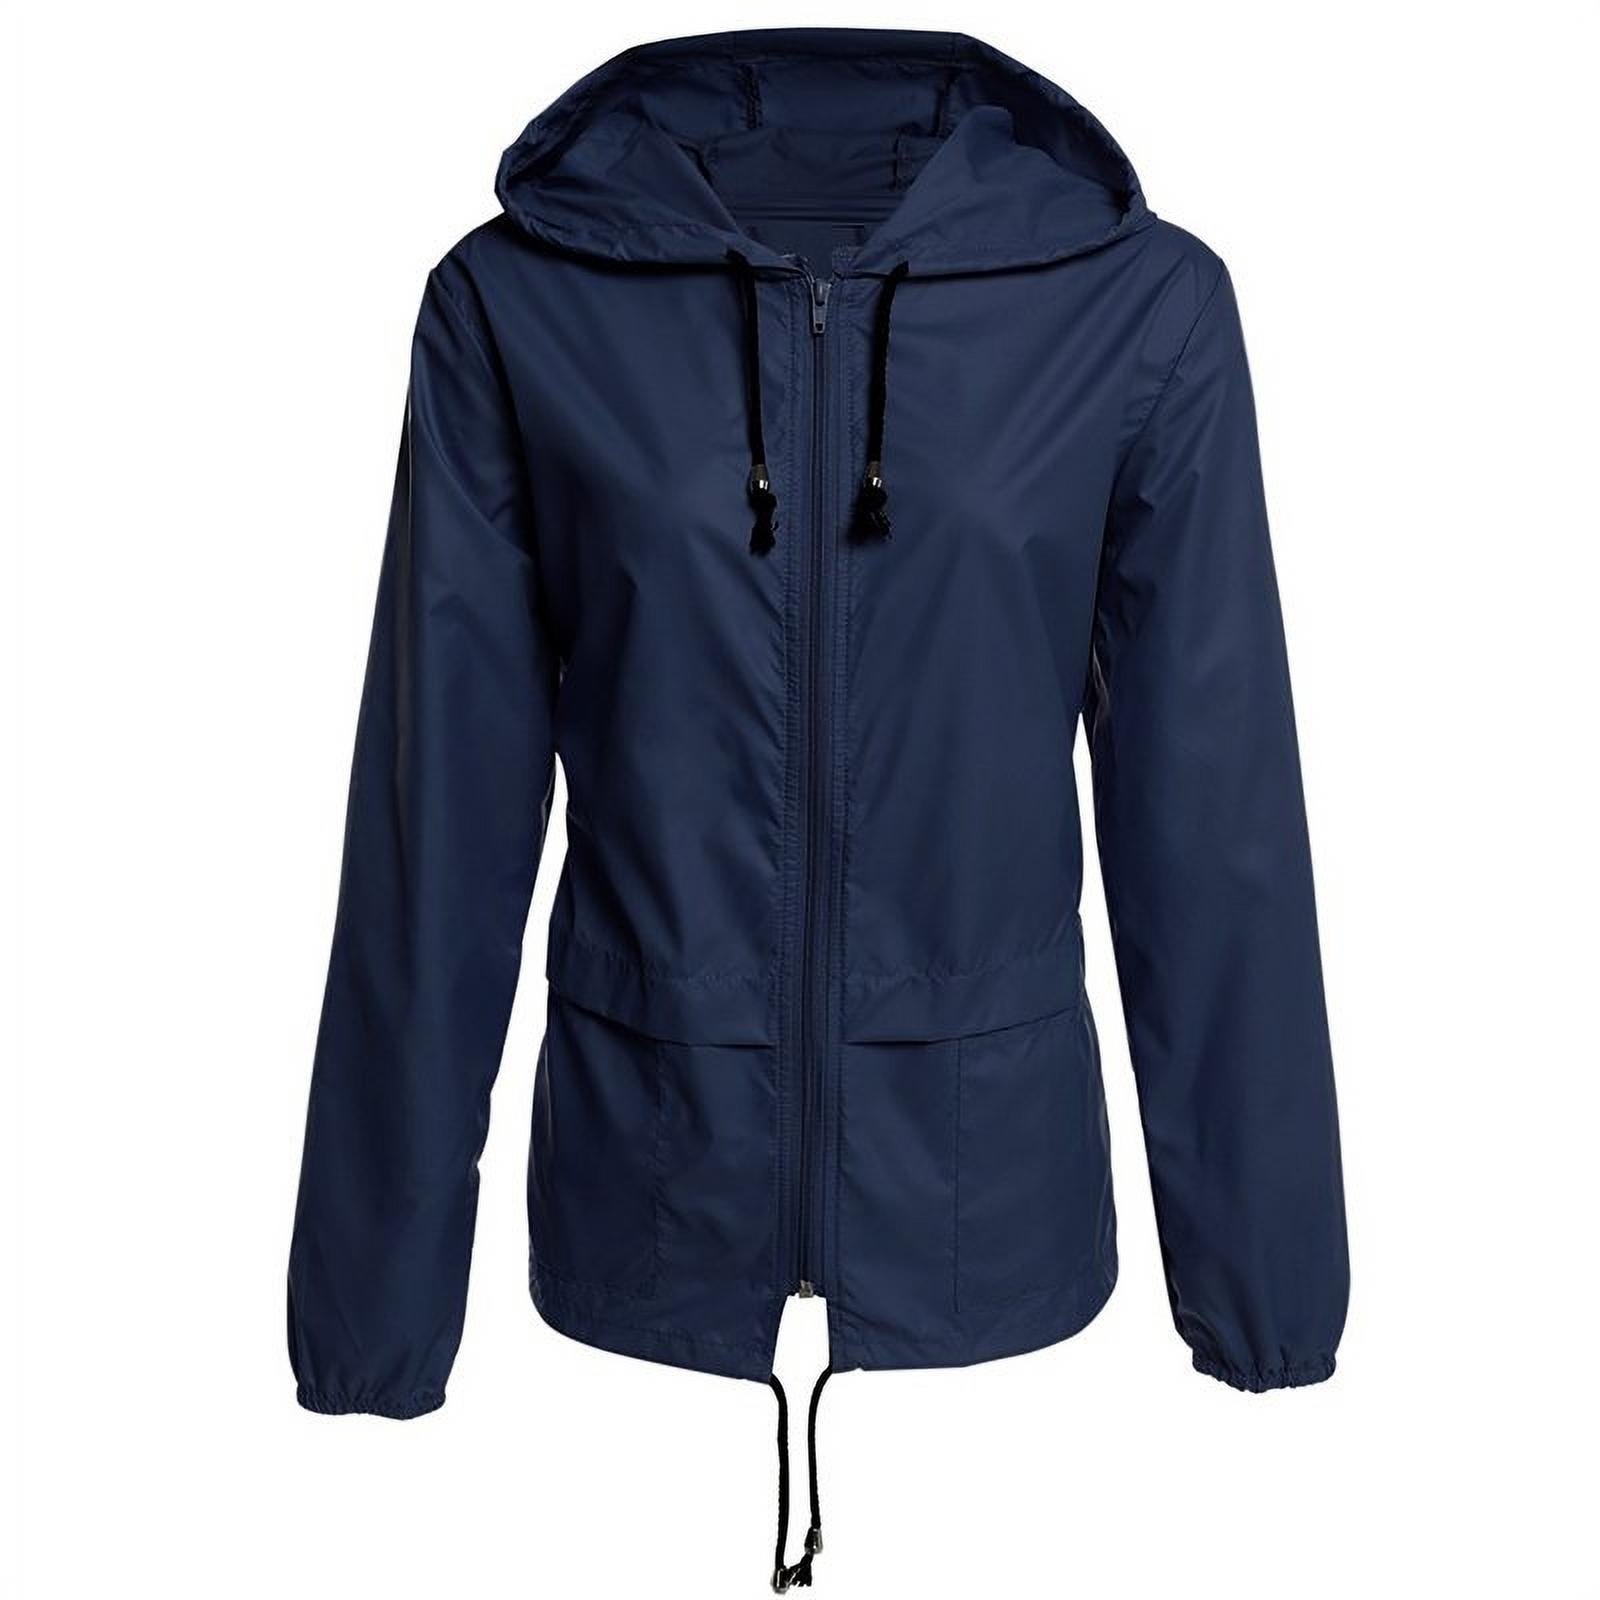 Fashion Thin Section Ladies Waterproof Clothing Hooded Drawstring Outdoor Hiking Rain Jacket Jacket - image 3 of 3